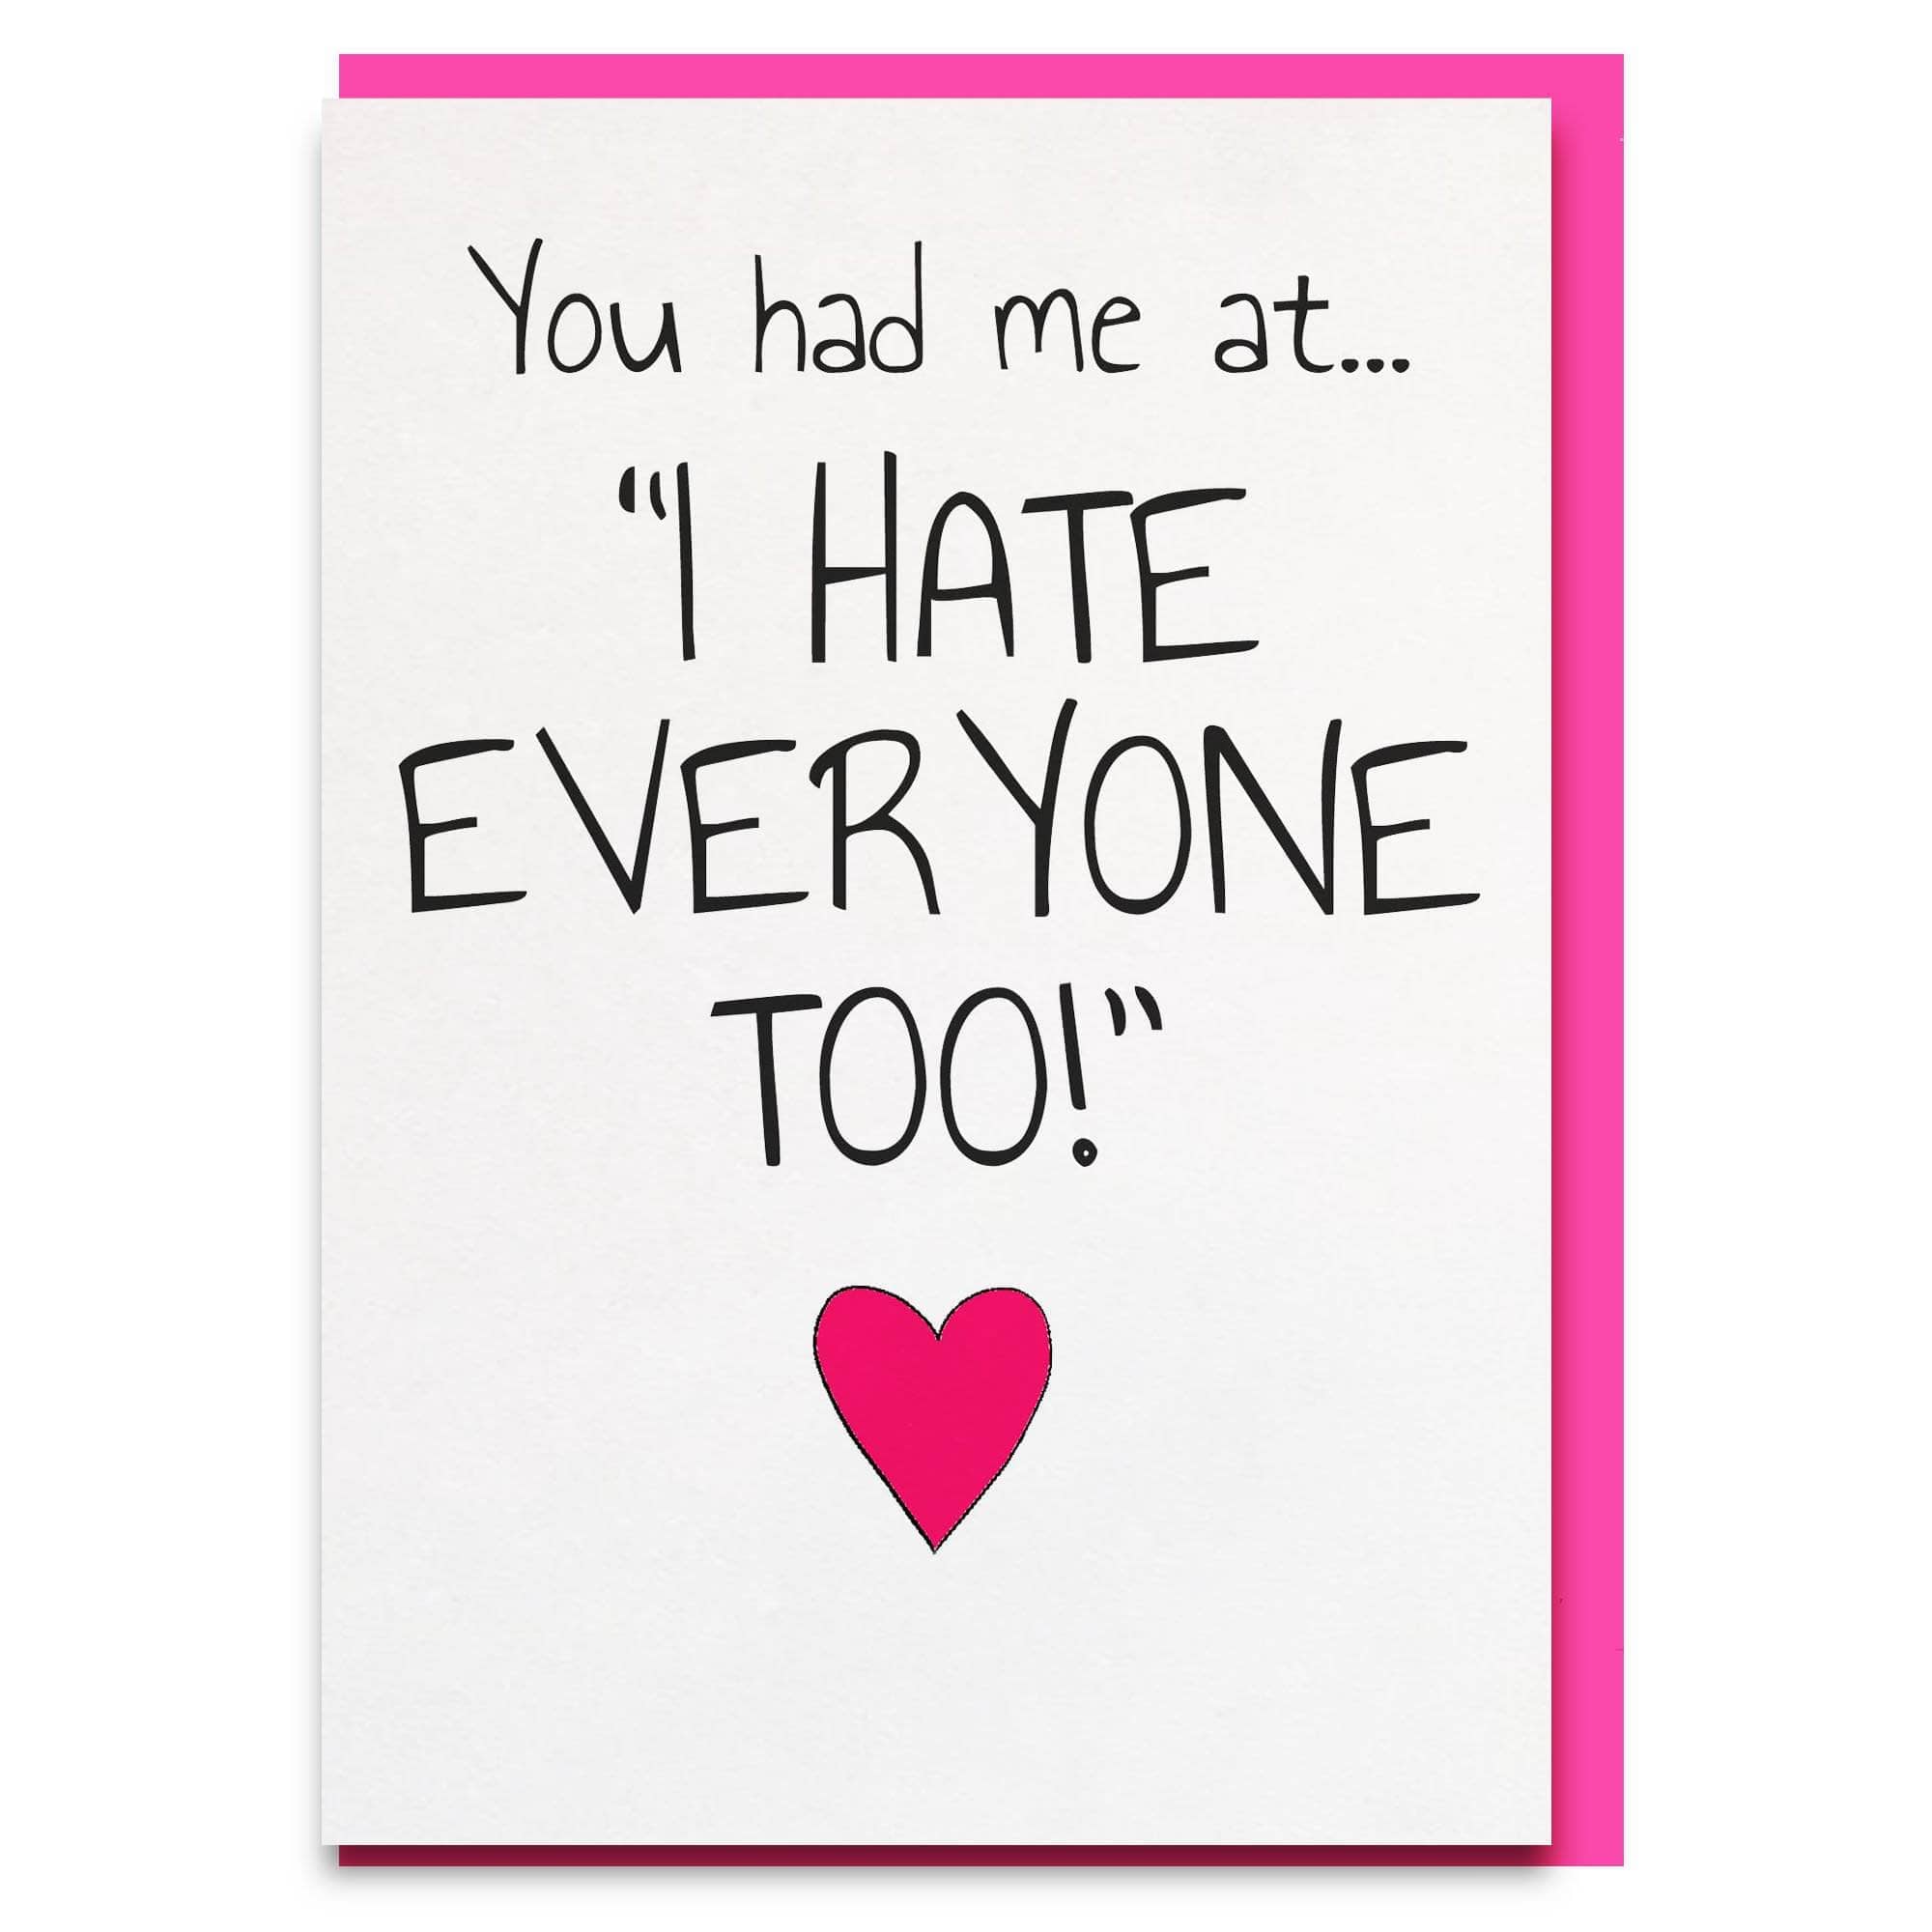 Hate everyone!